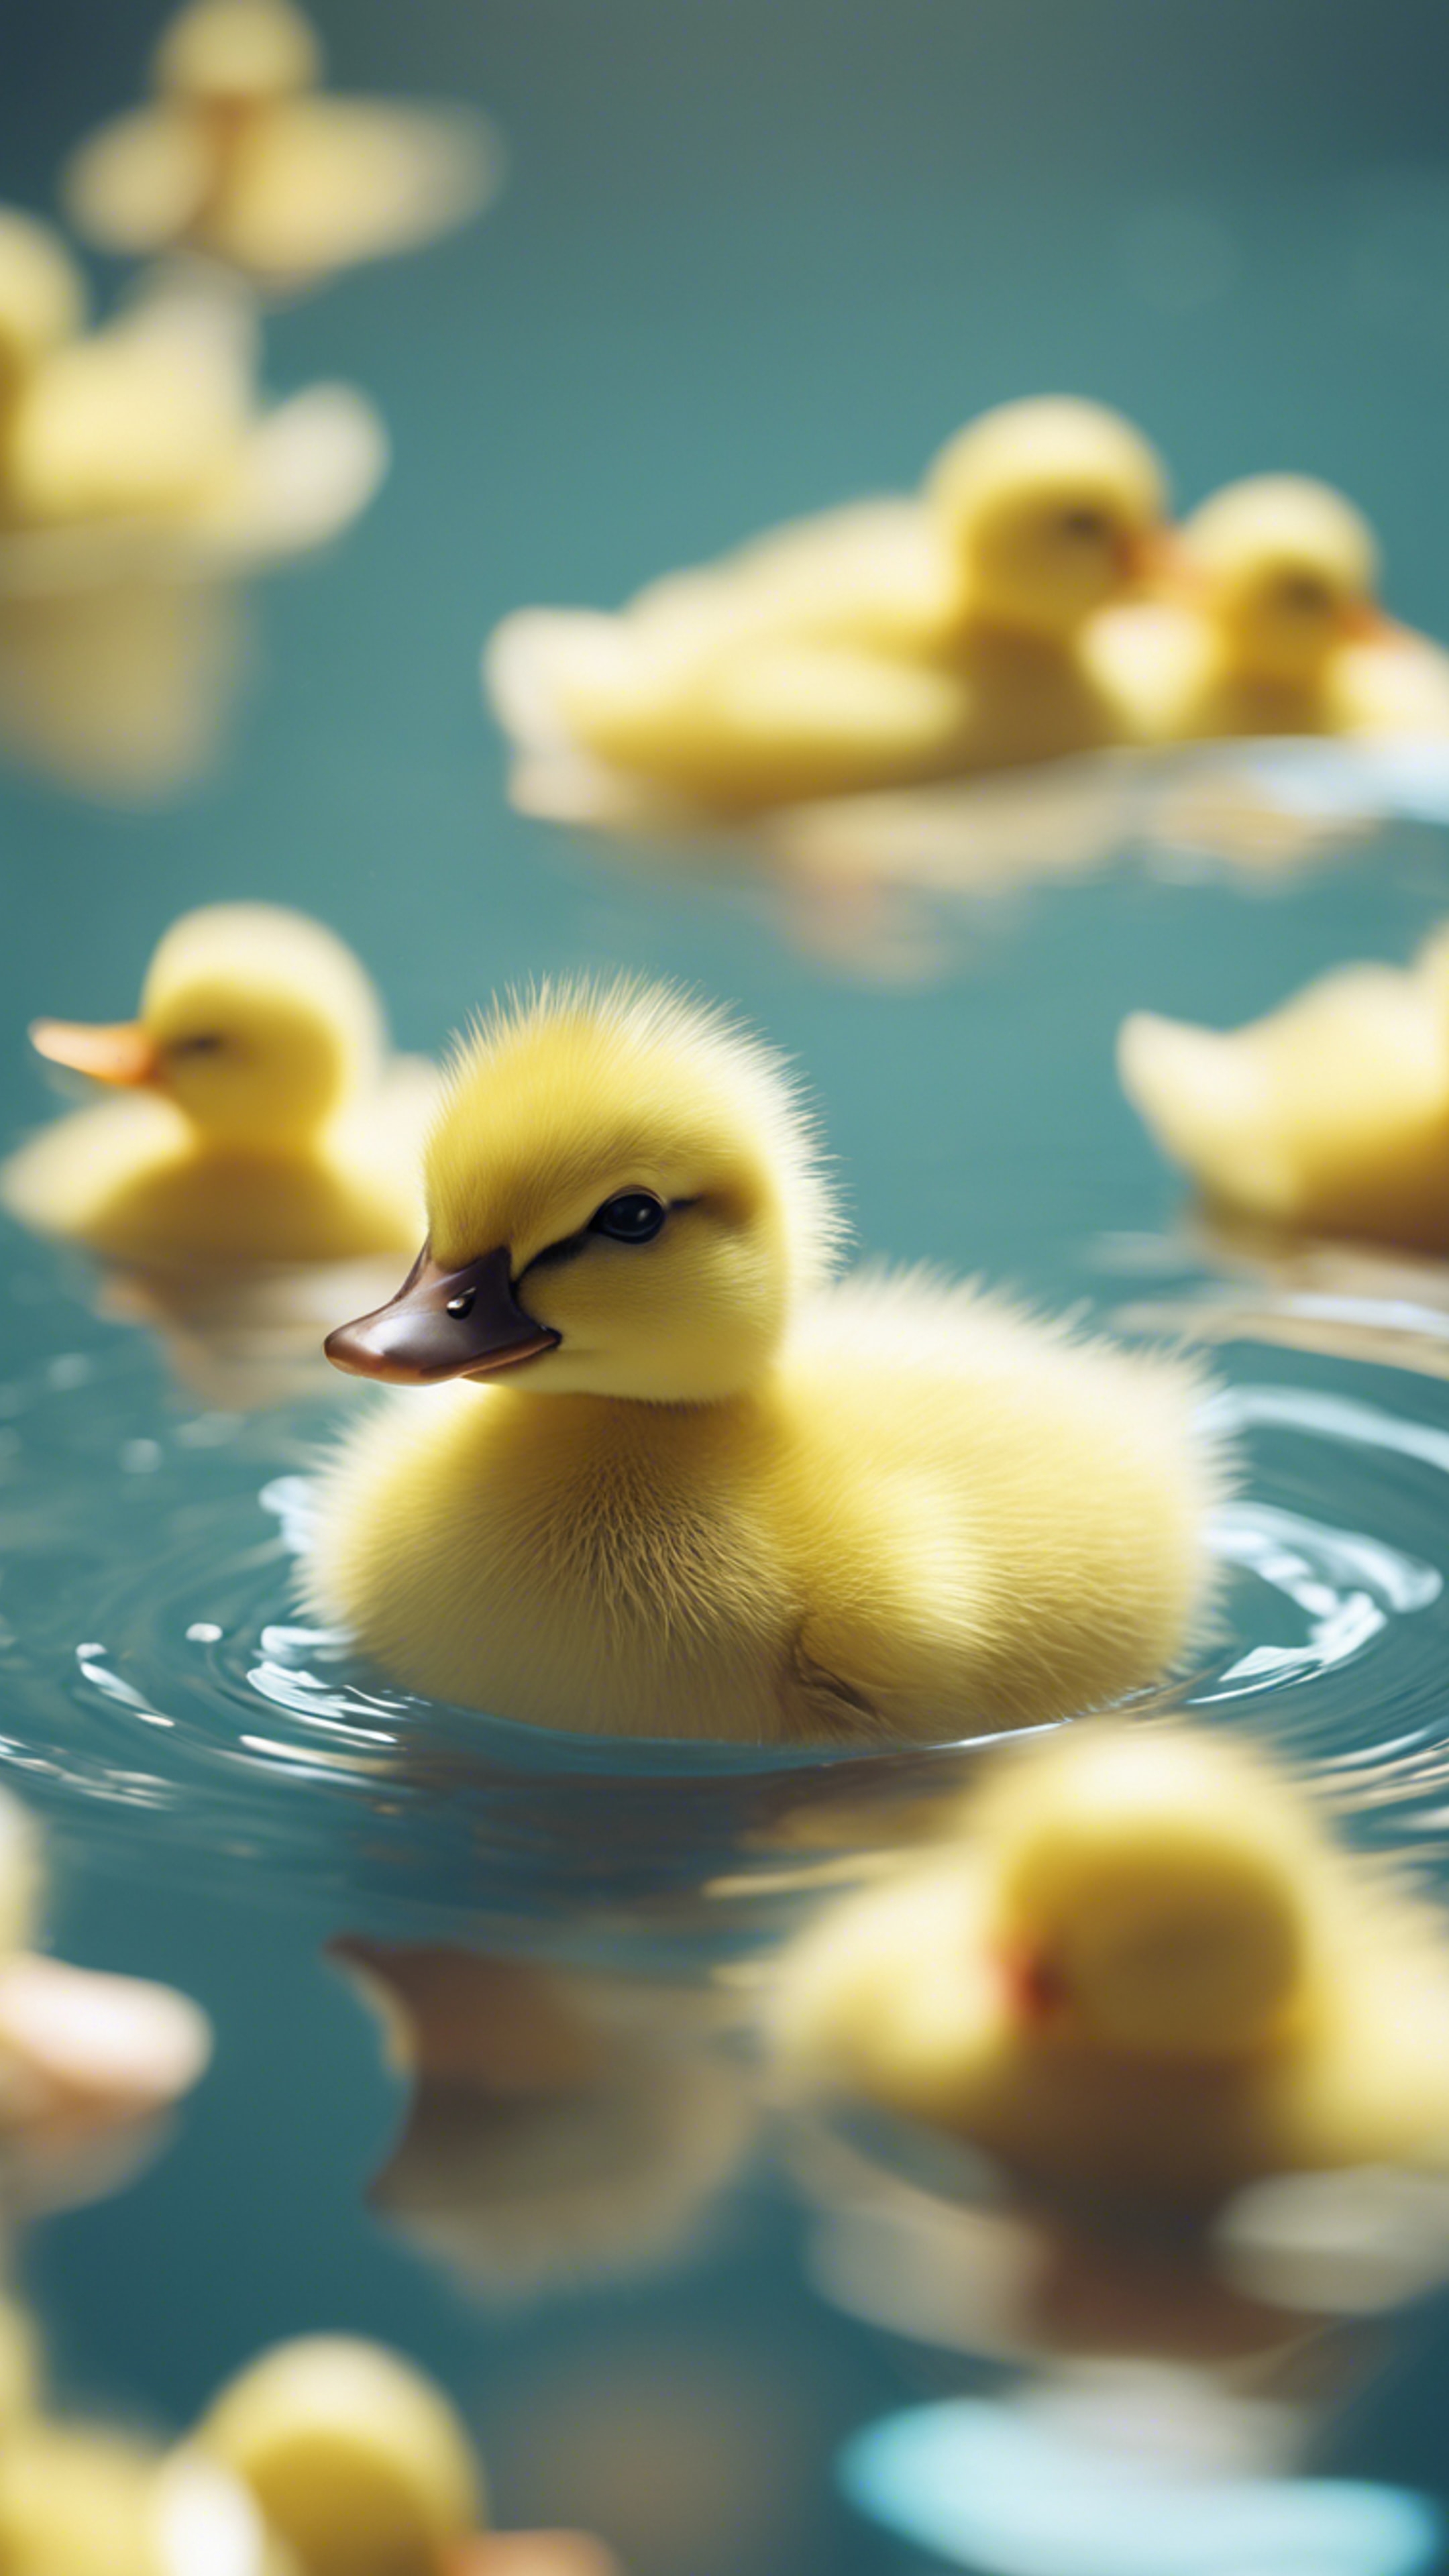 A small, chubby, kawaii yellow duckling swimming in a pastel blue pond. Обои[2b07b187d2cc4e759cc9]